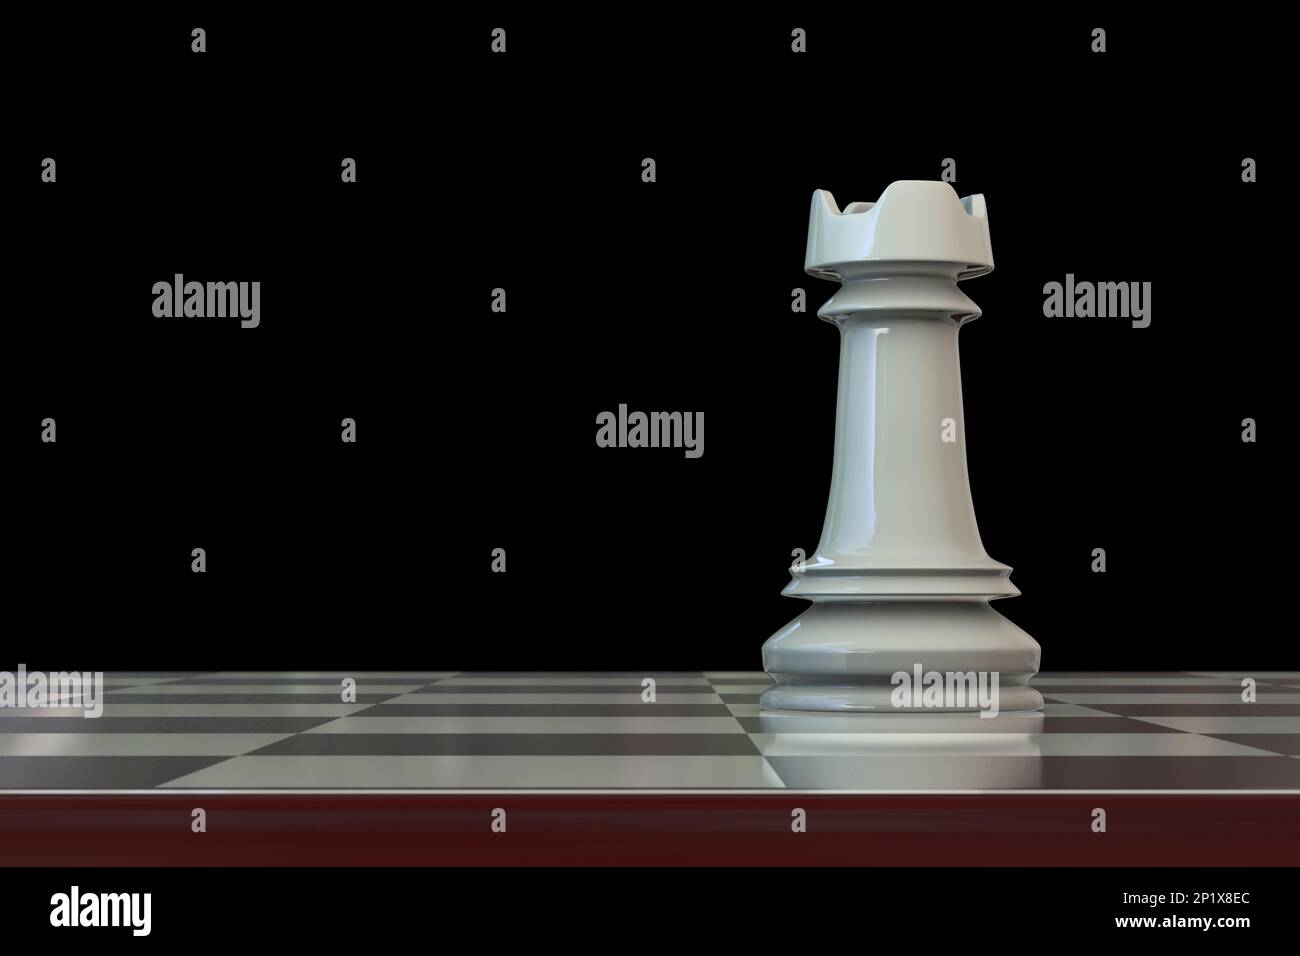 Chess rook, illustration Stock Photo - Alamy